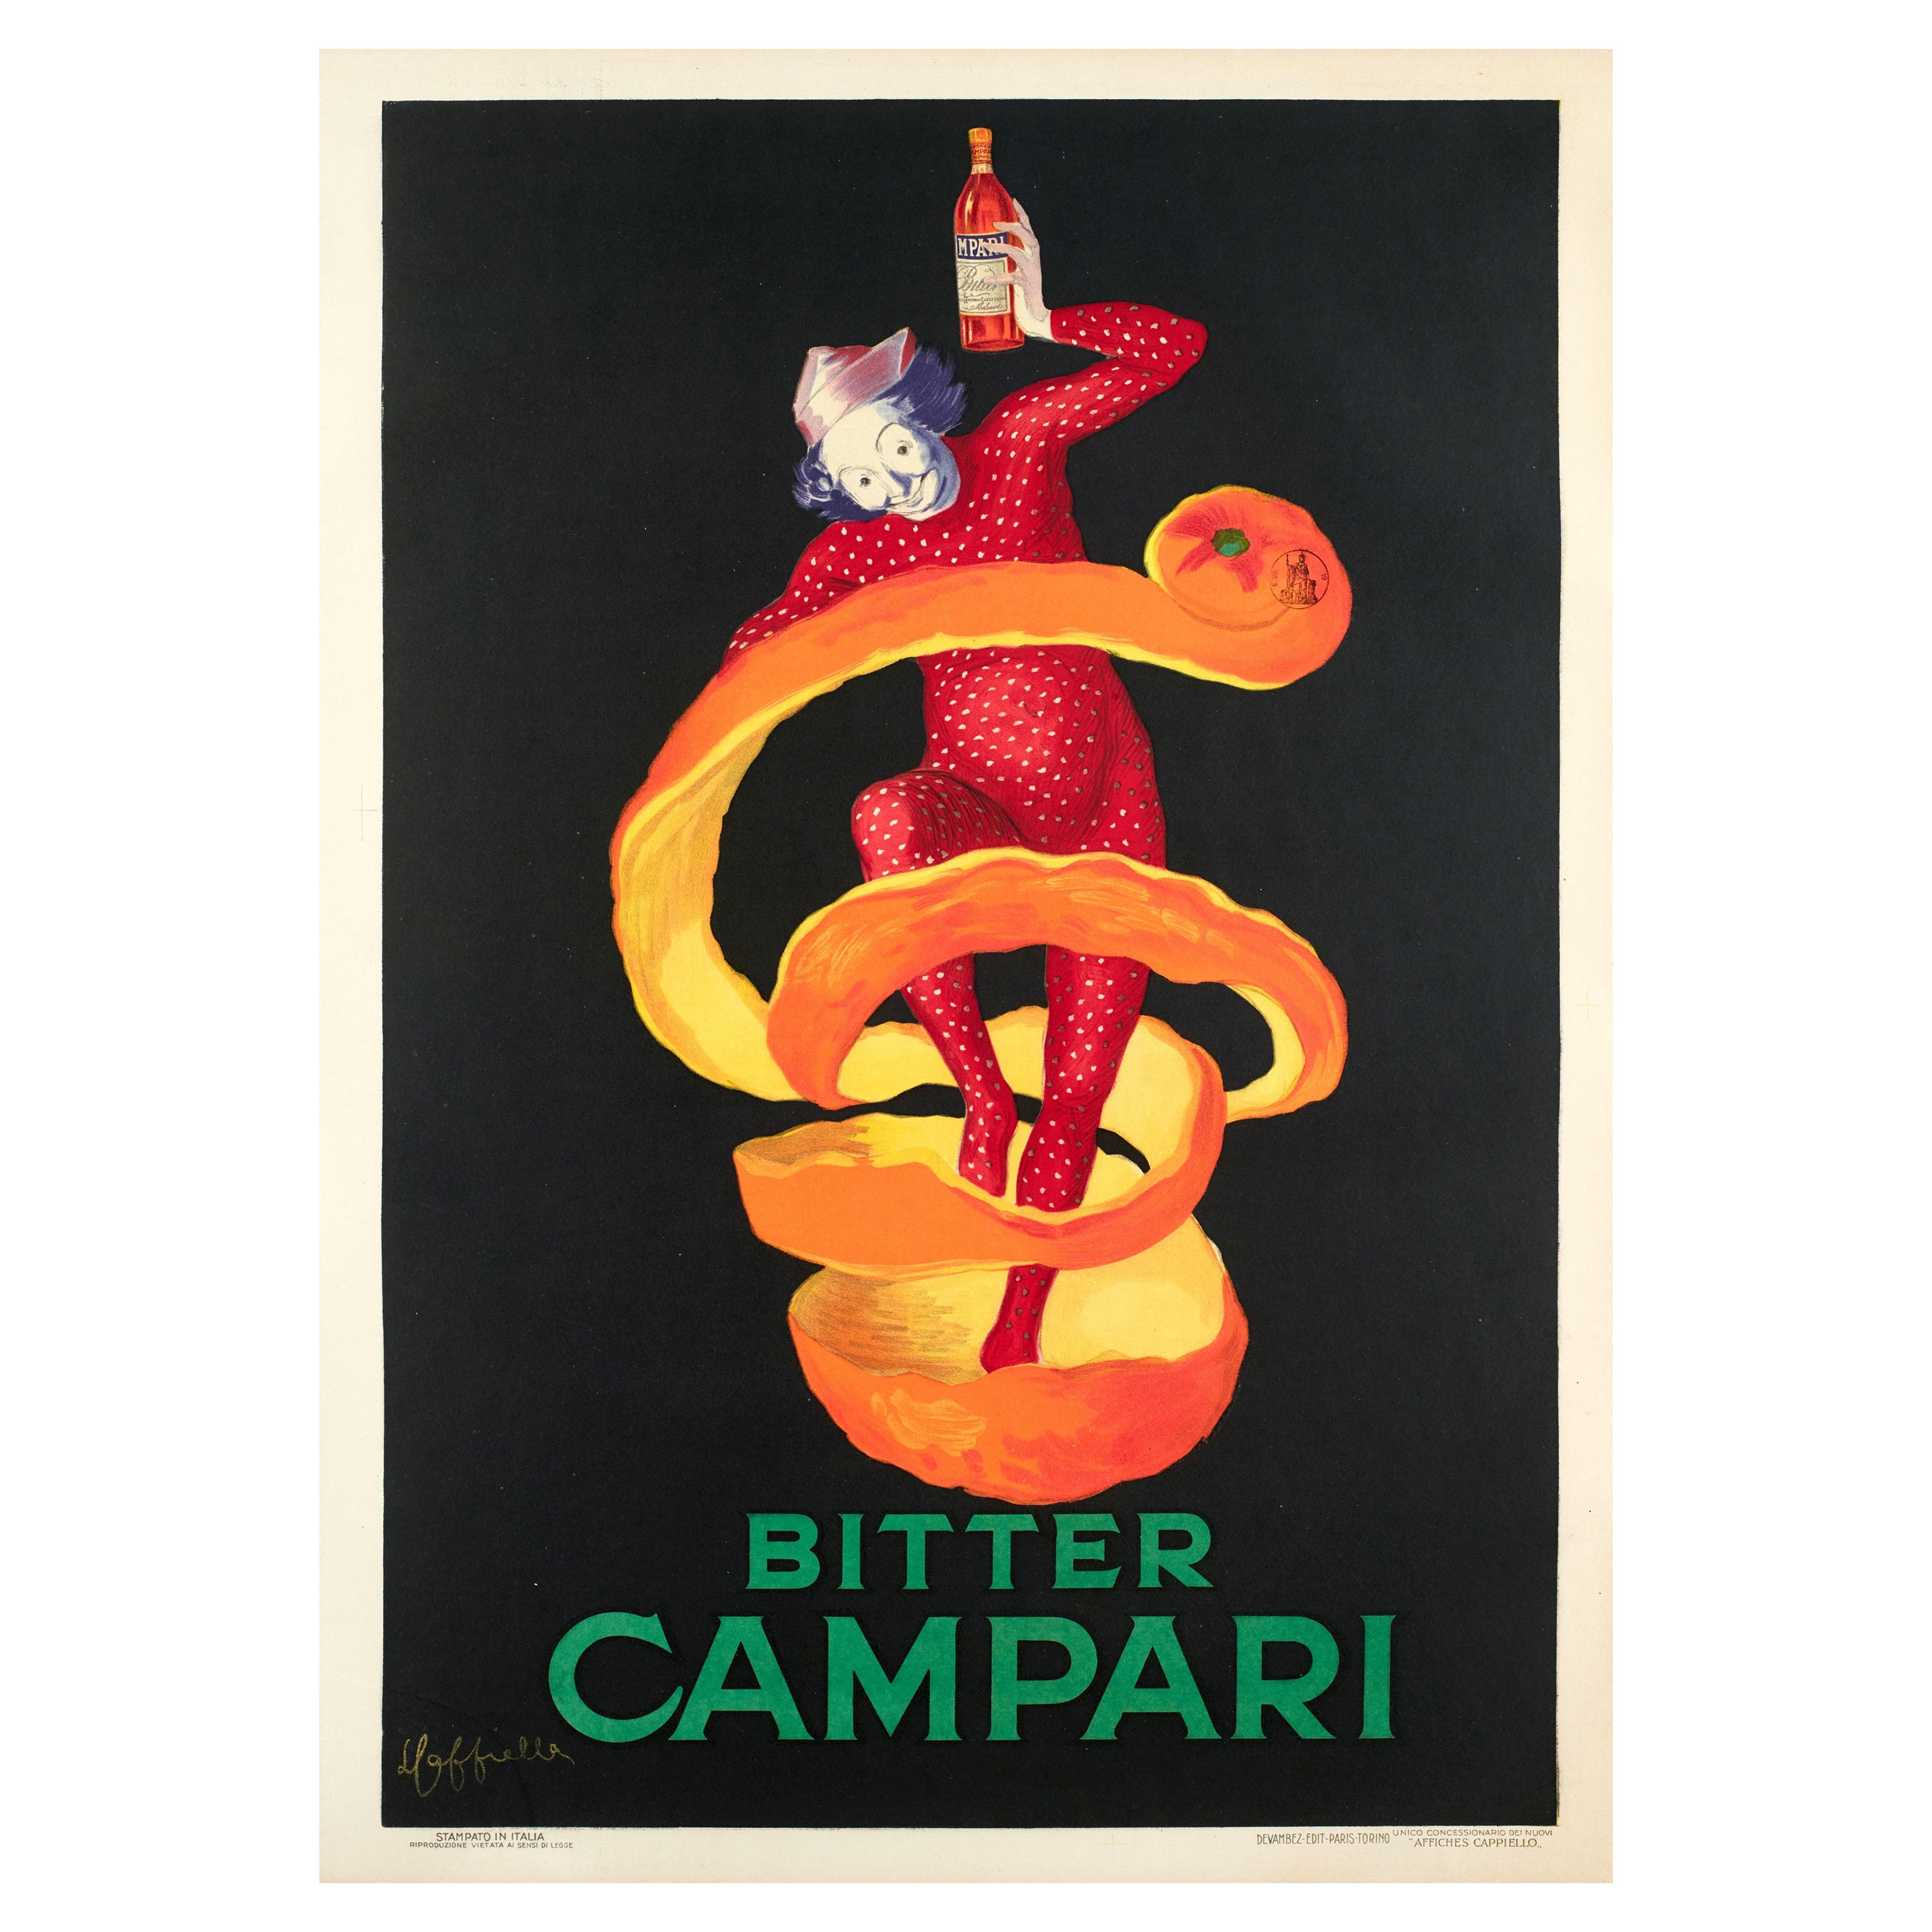 Originales Vintage-Alcoholplakat von Leonetto Cappiello, Bitter Campari, Clown, 1921